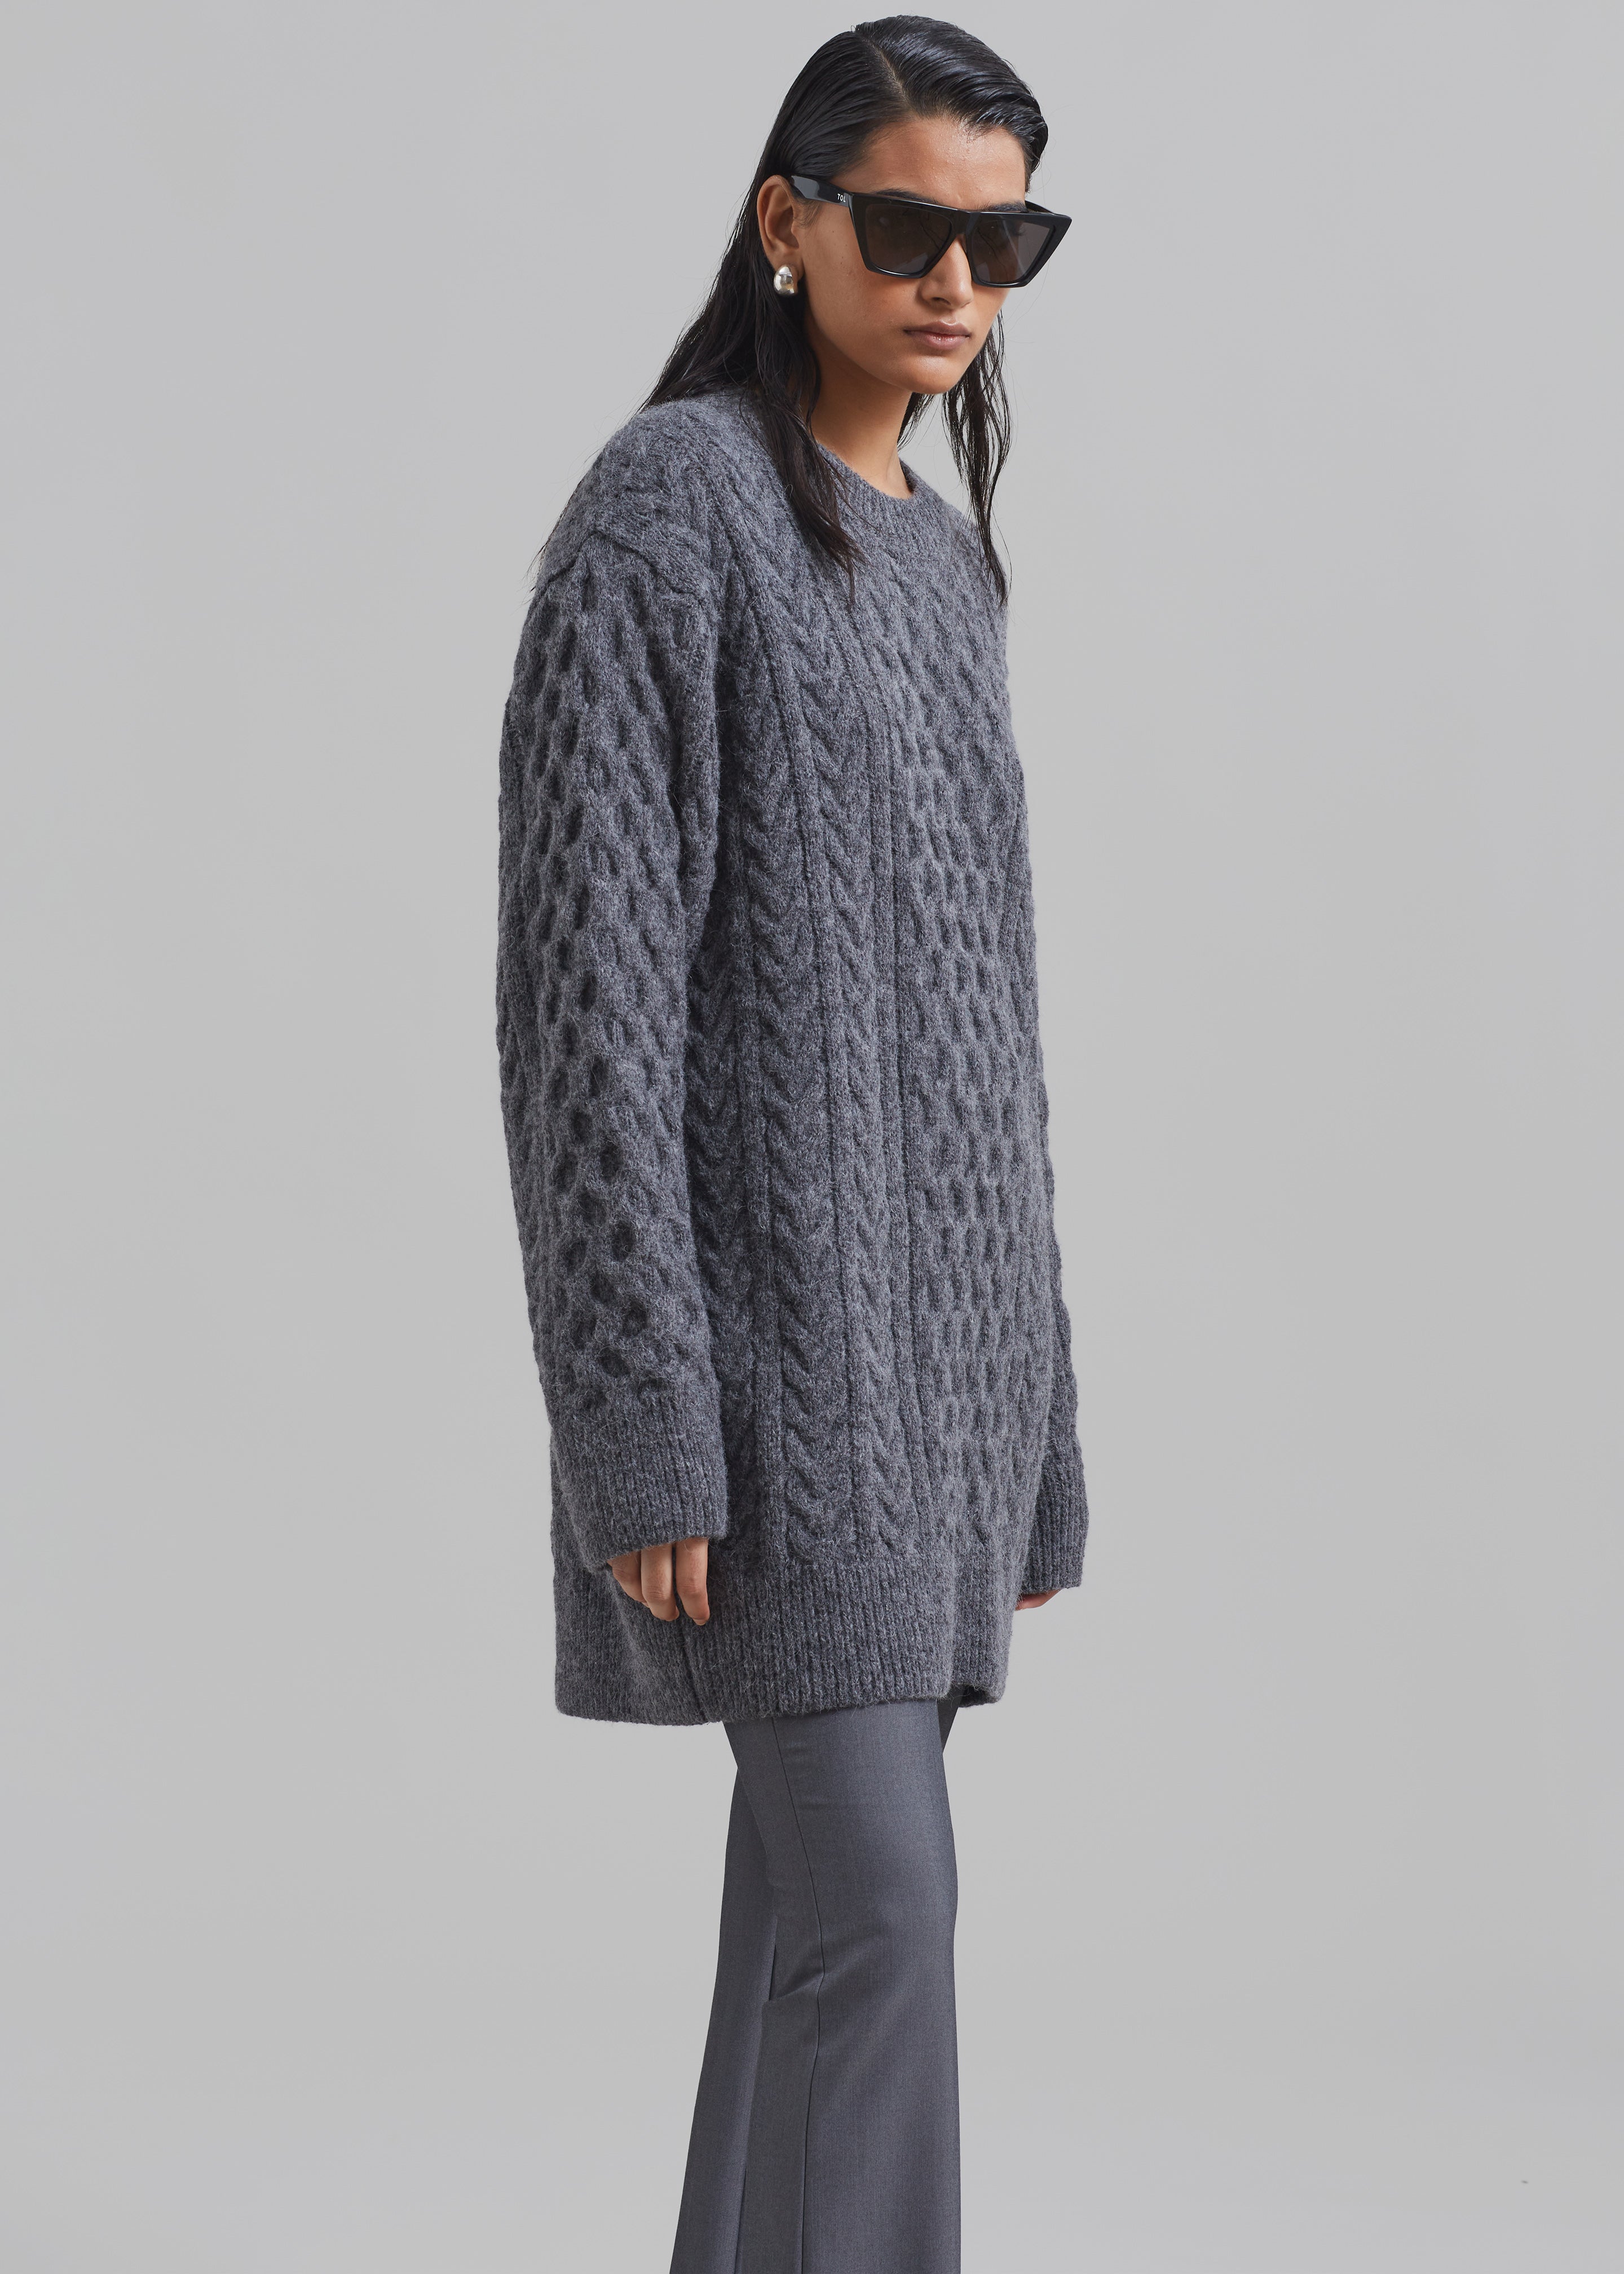 Leighton Braided Knit Sweater - Grey - 2